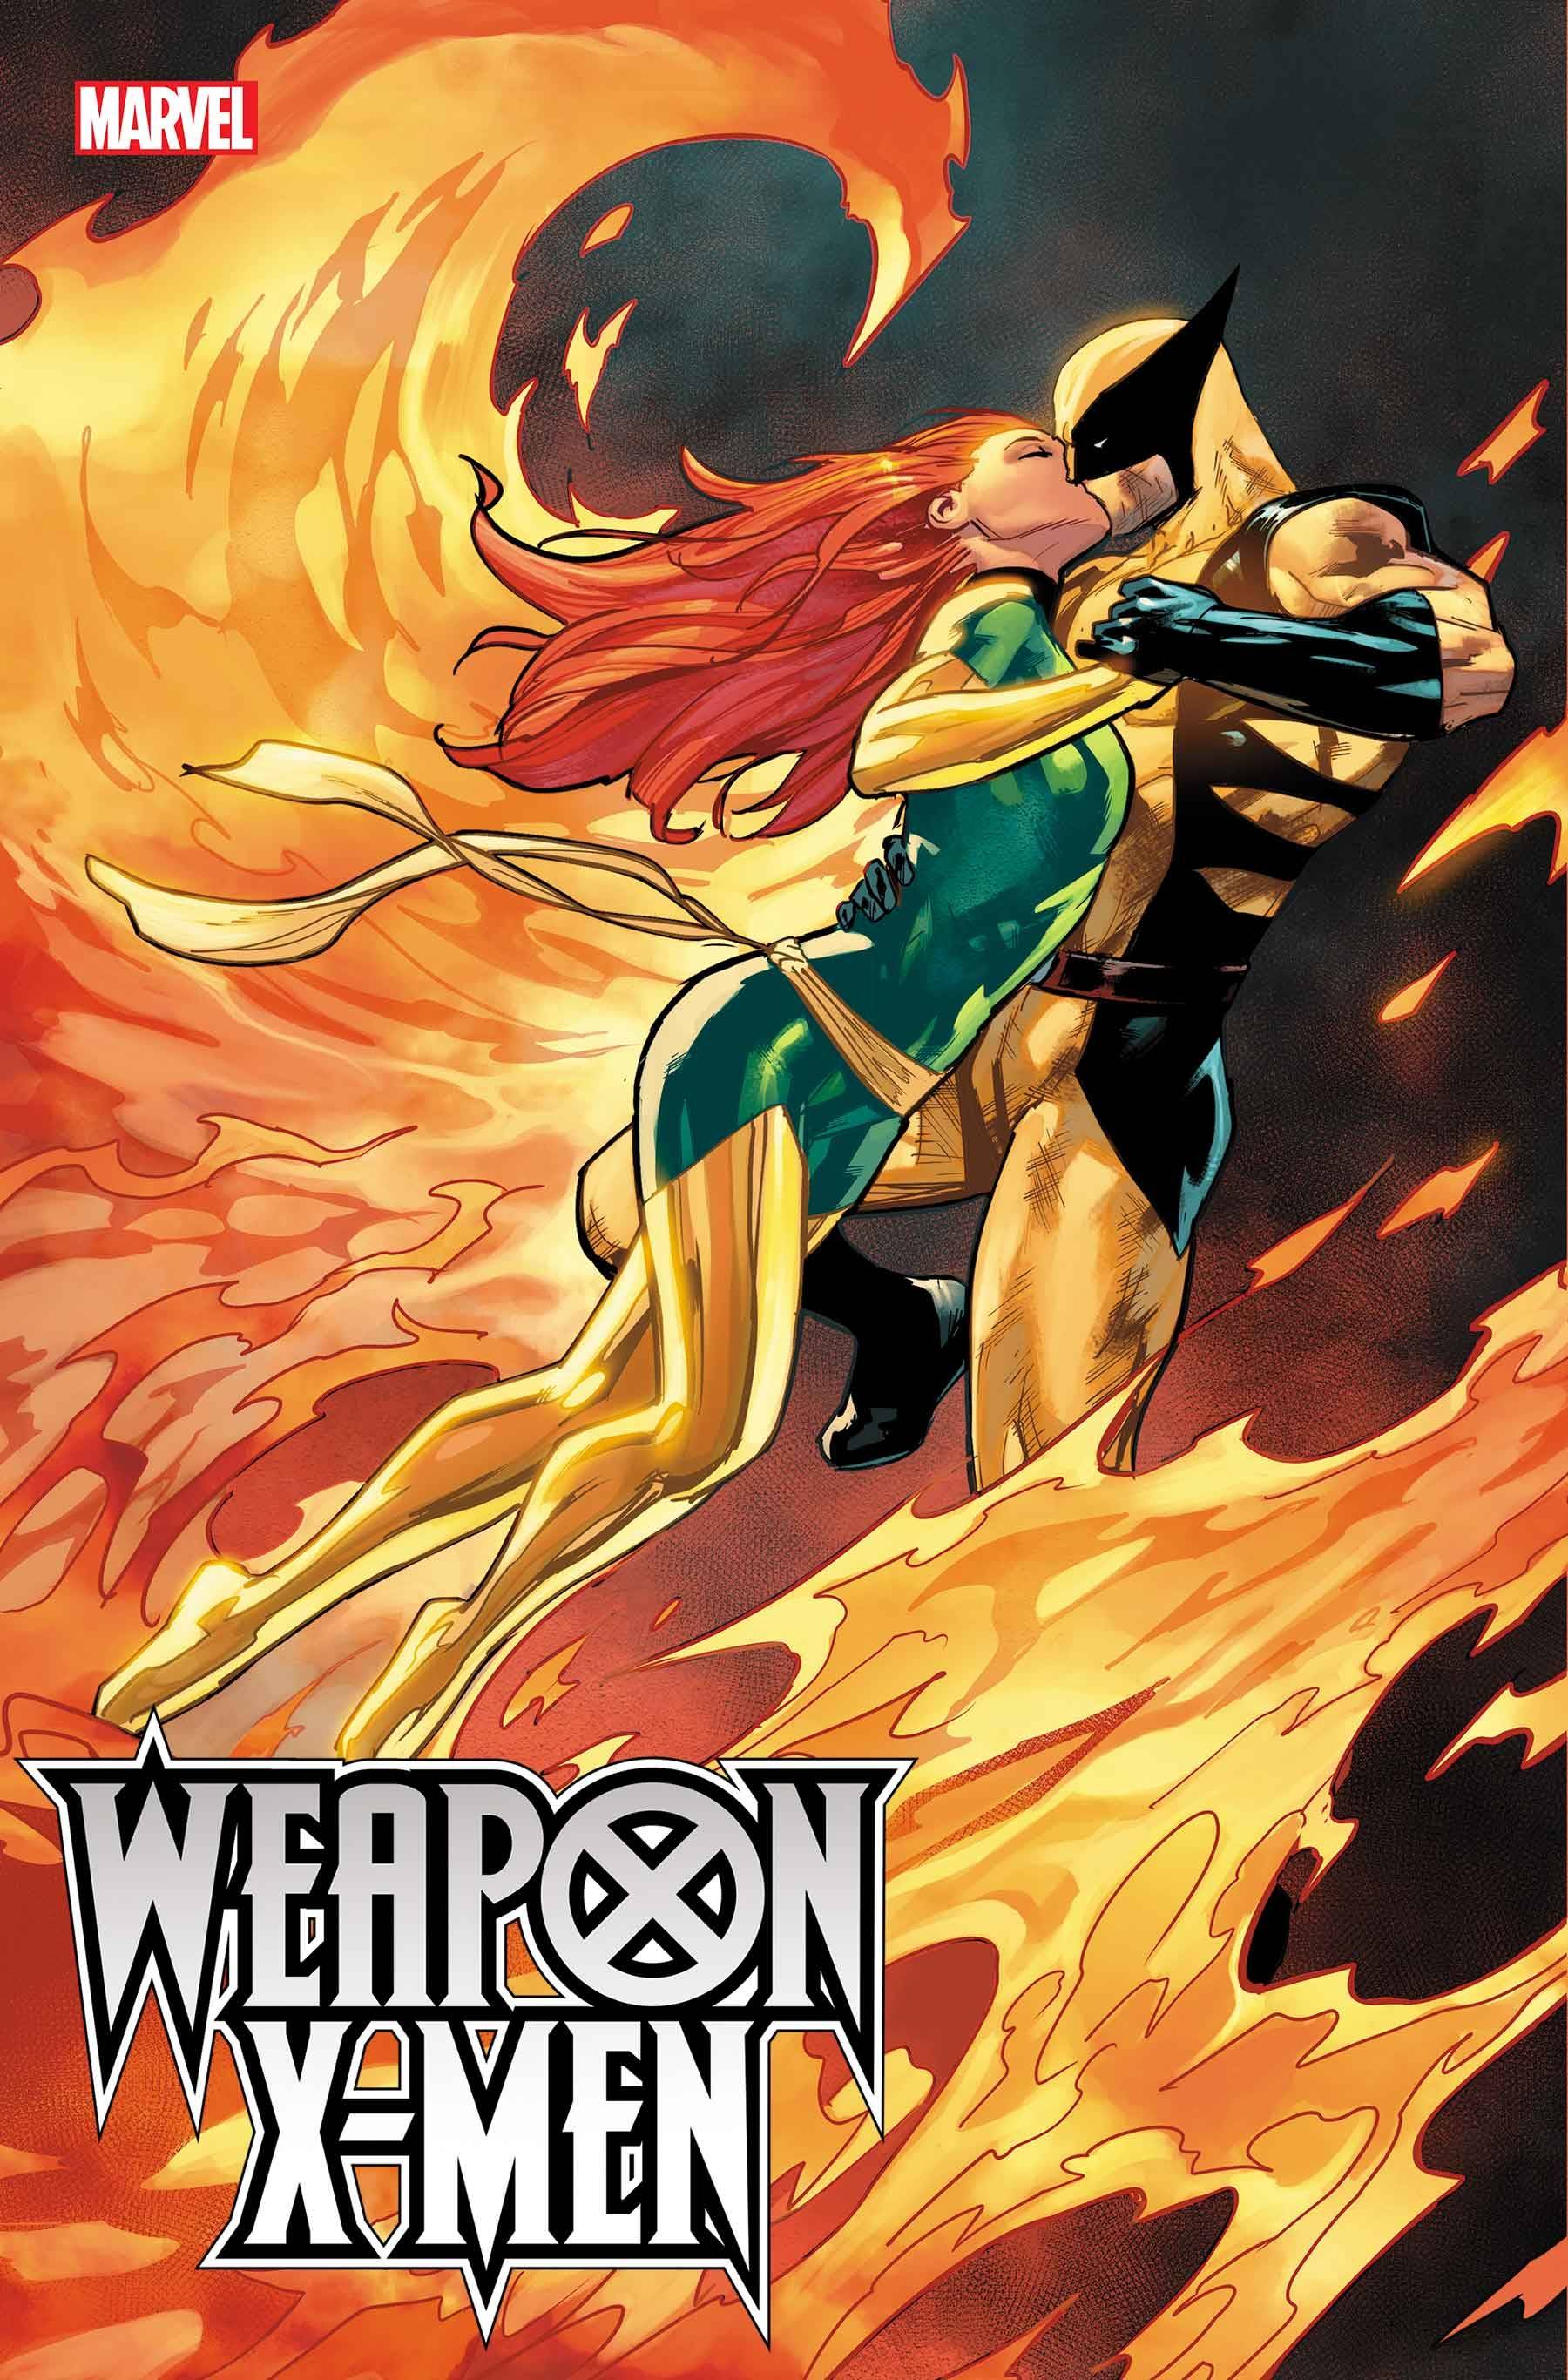 WEAPON X-MEN